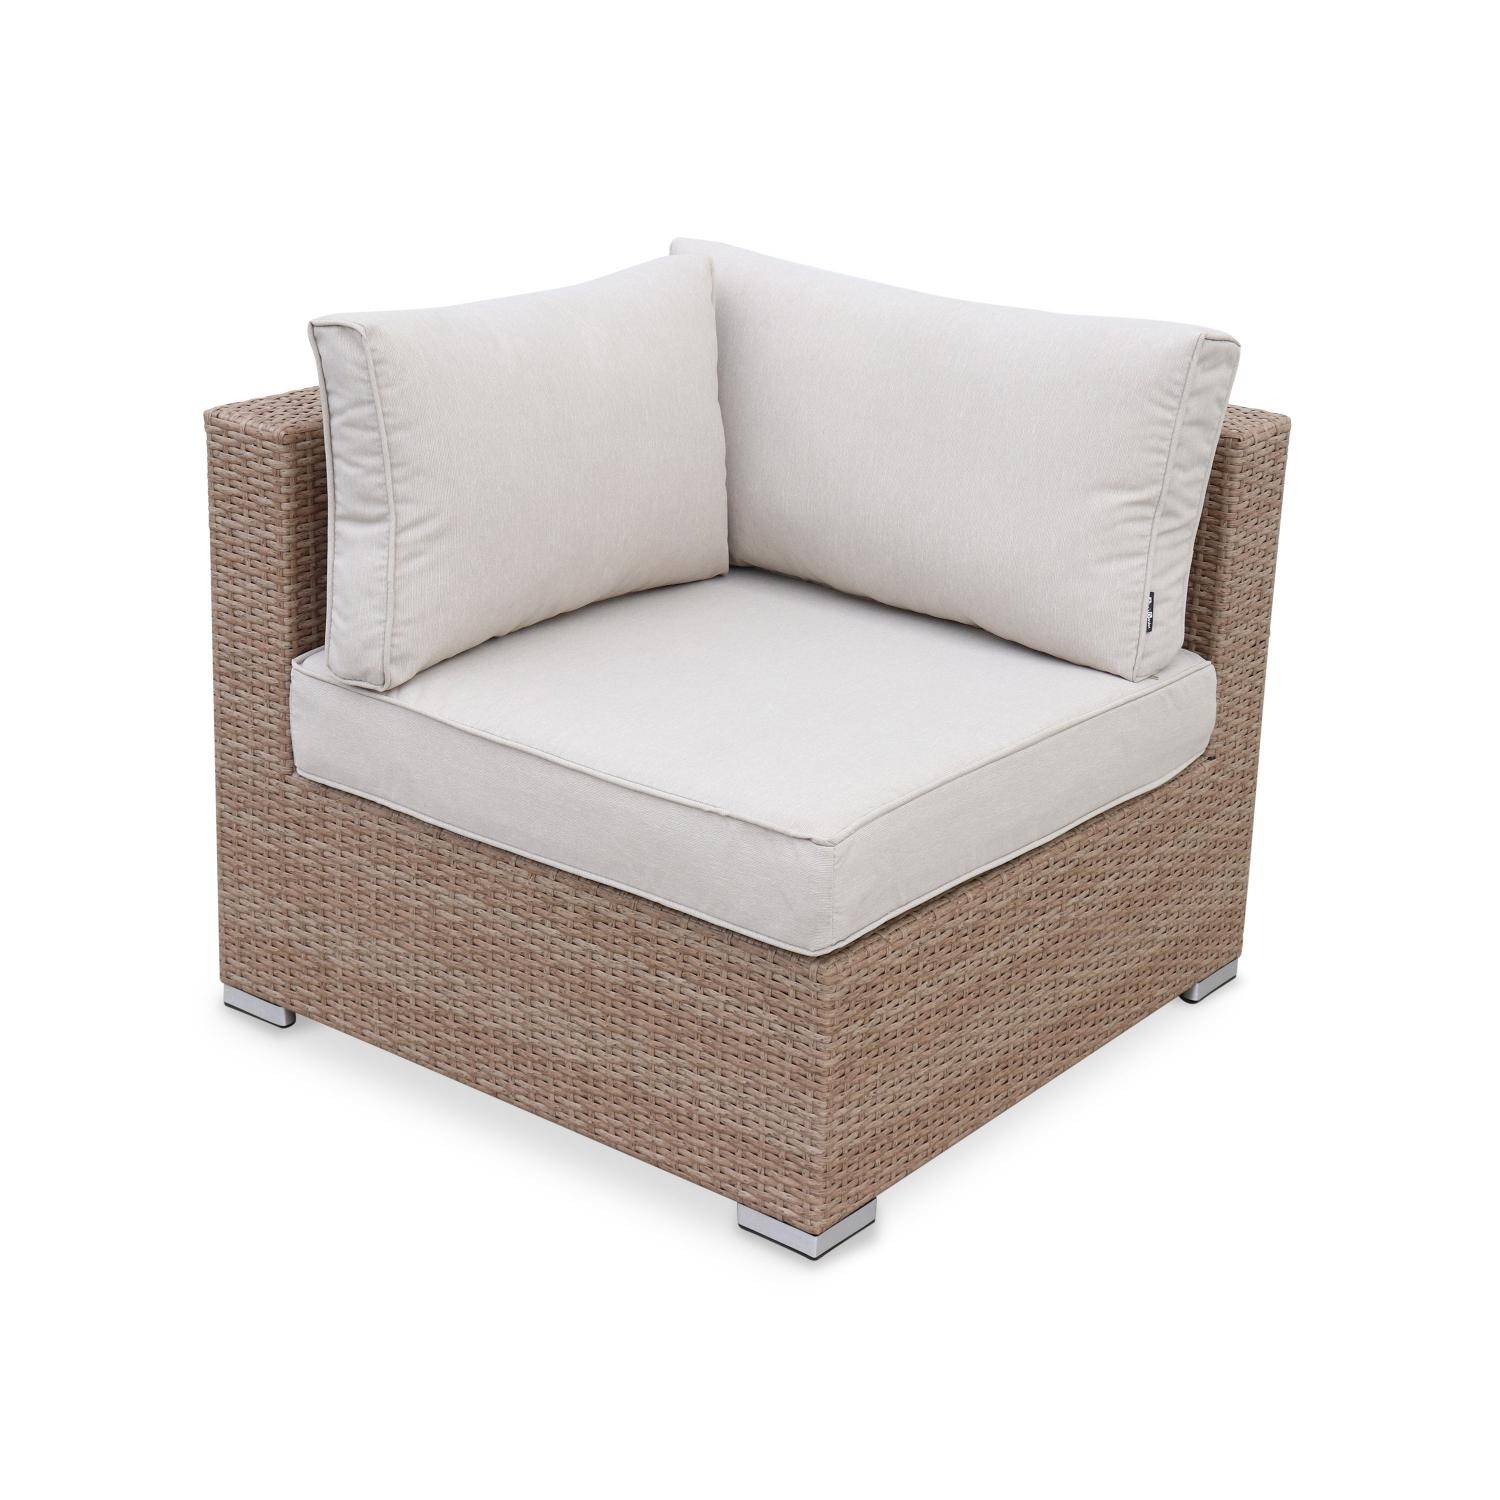 Ready assembled 5-seater polyrattan corner garden sofa set with coffee table, Napoli. Beige Photo4